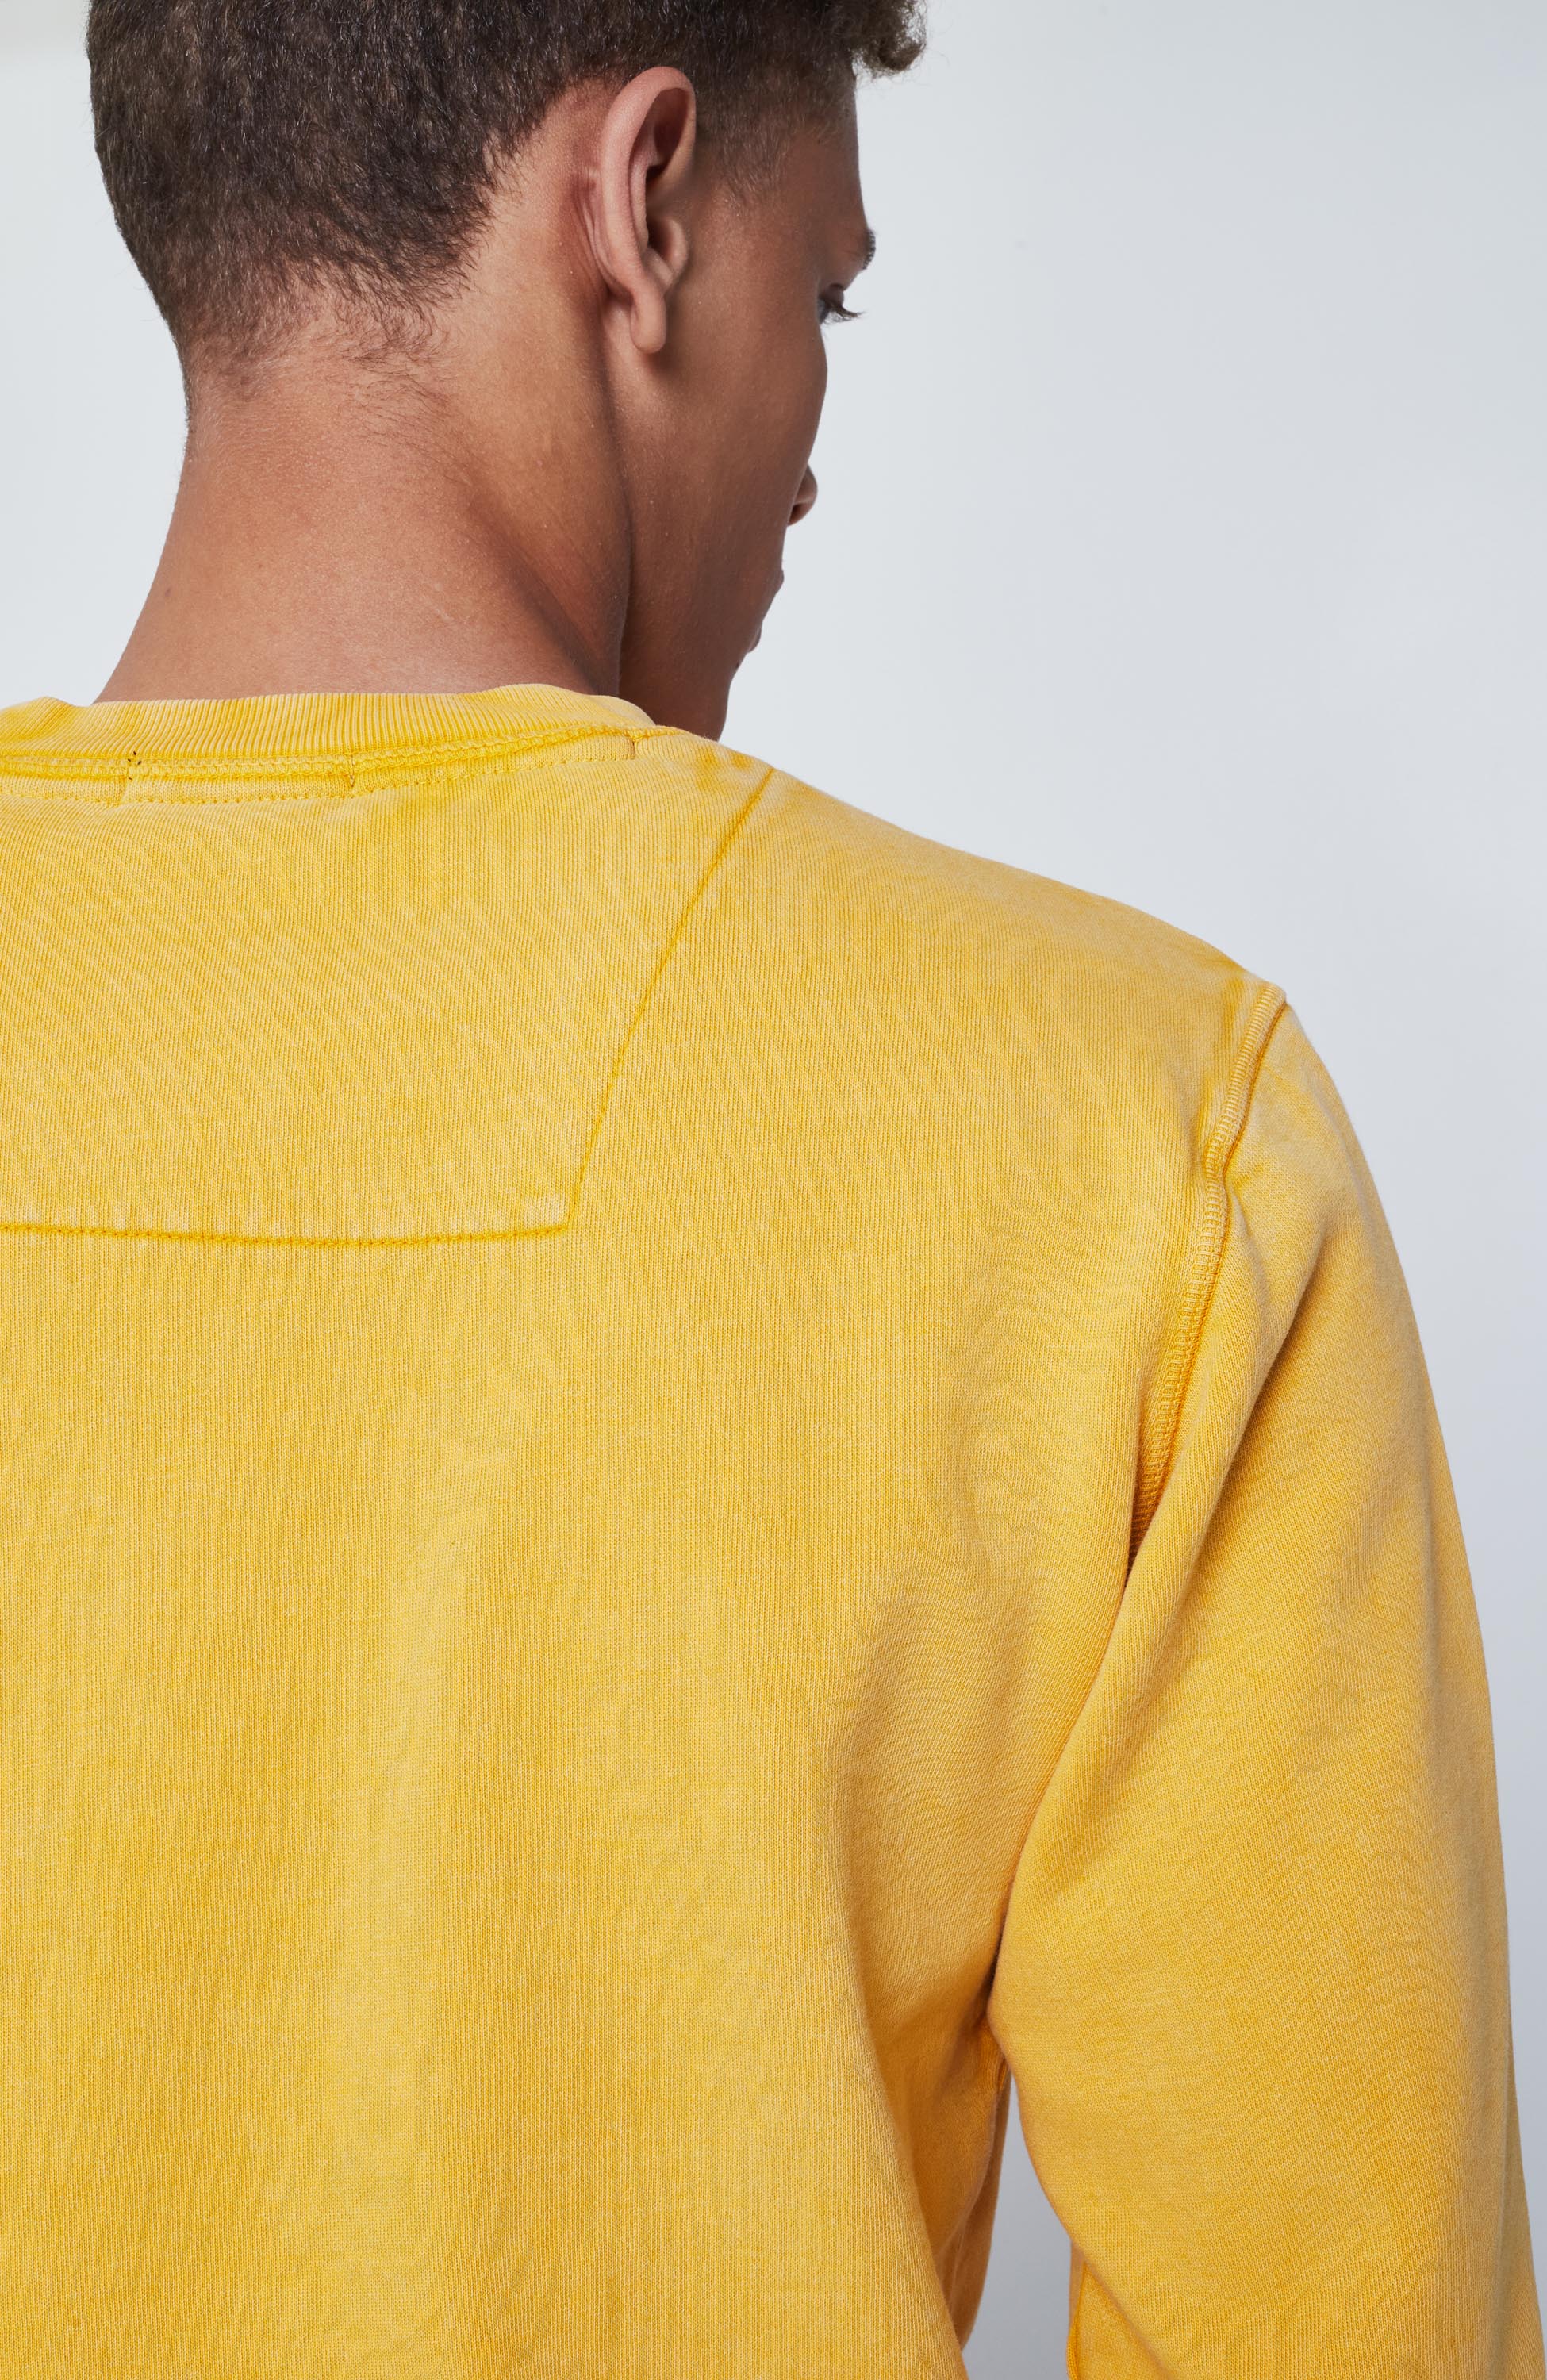 Garment-dyed cotton sweatshirt